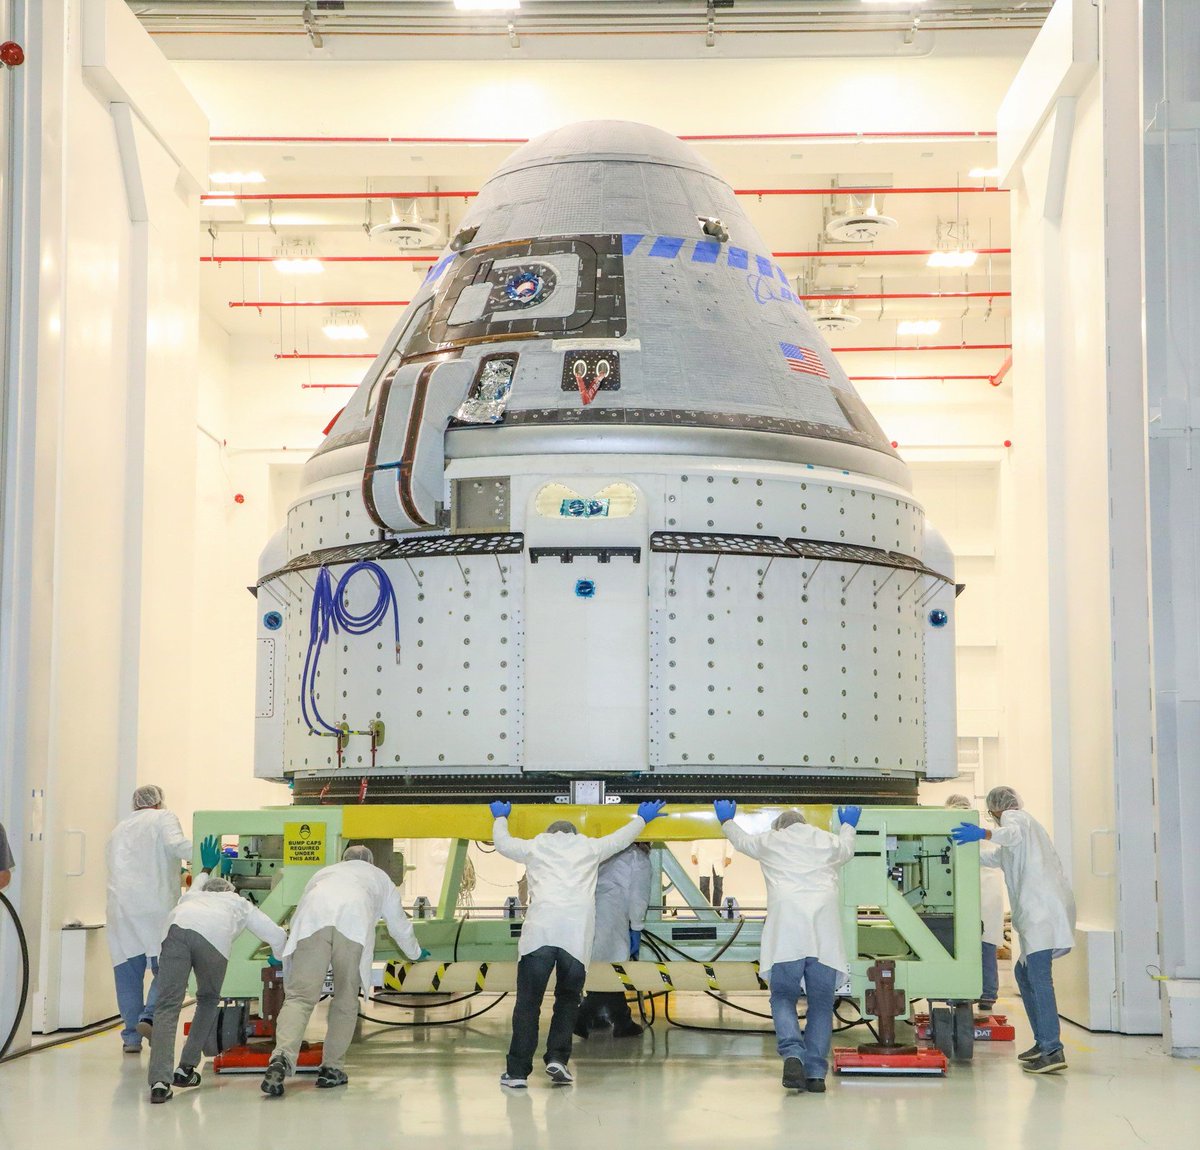 The CST-100 Starliner spacecraft to be flown on Boeing’s Orbital Flight Test (OFT)